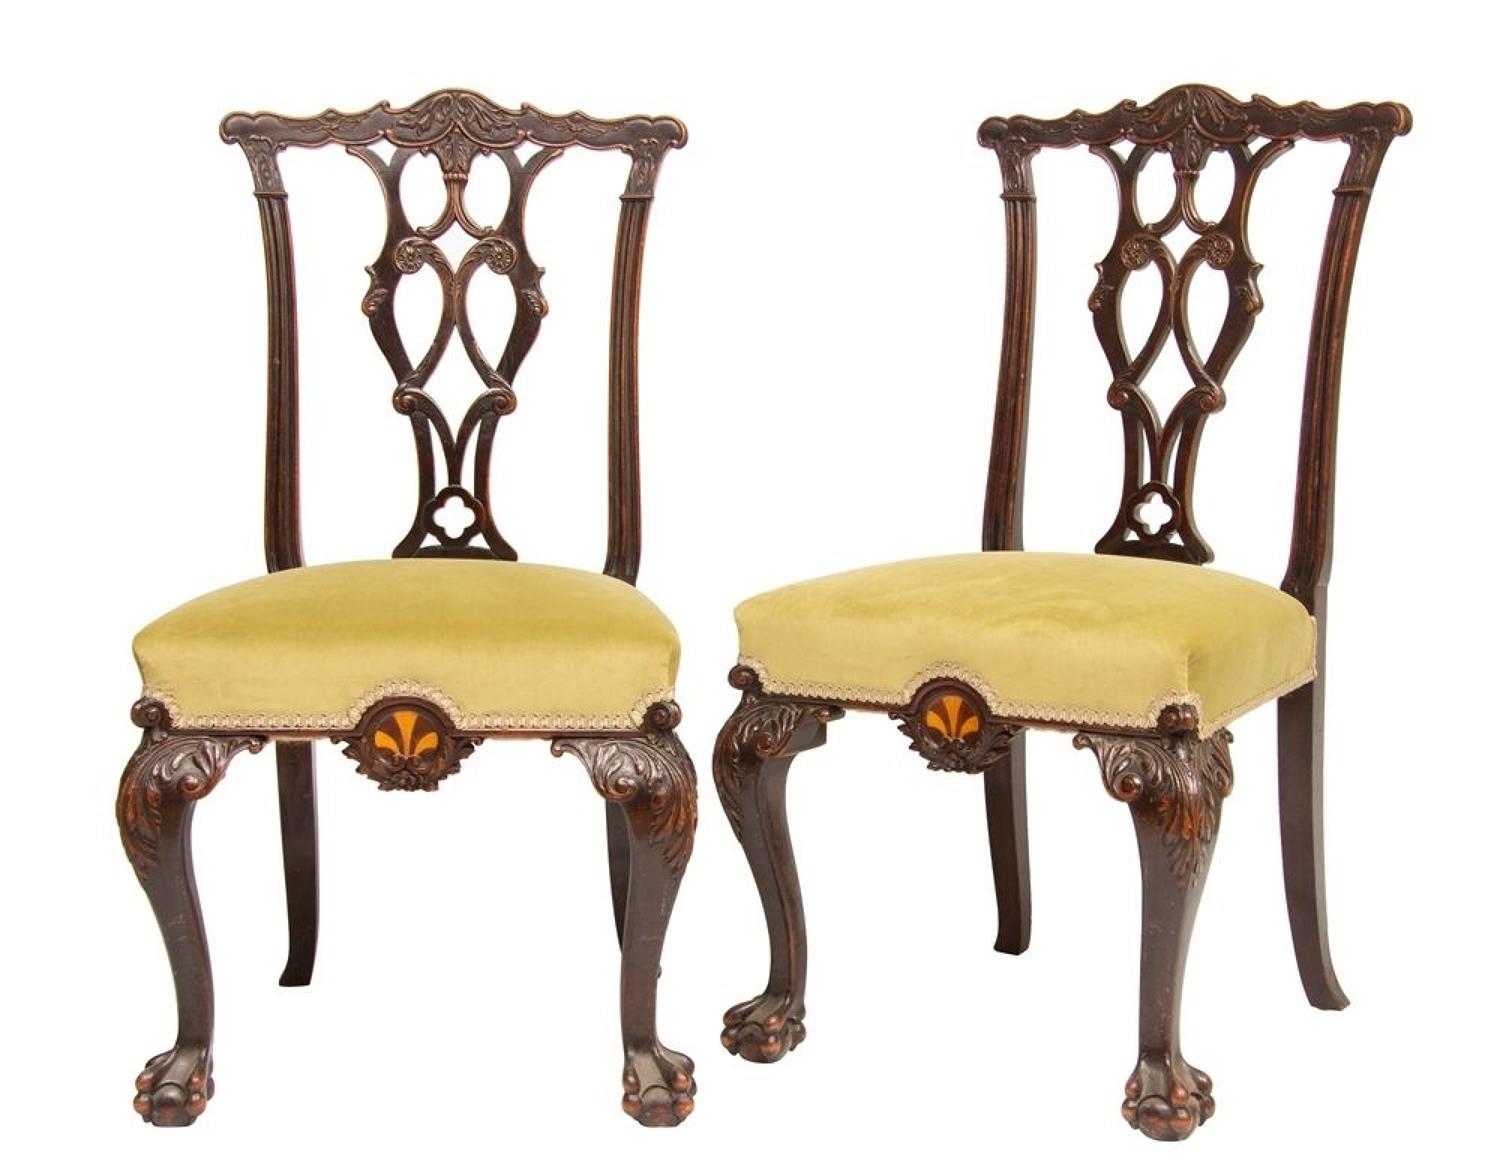 Mahogany Chairs with Specimen Wood Inlay c.1860